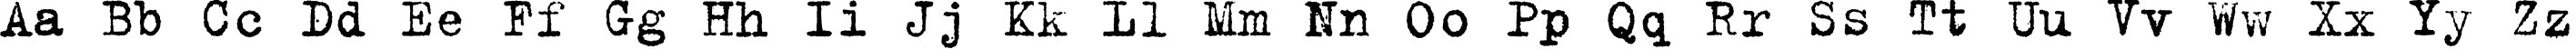 Пример написания английского алфавита шрифтом TrixieCyr-Plain